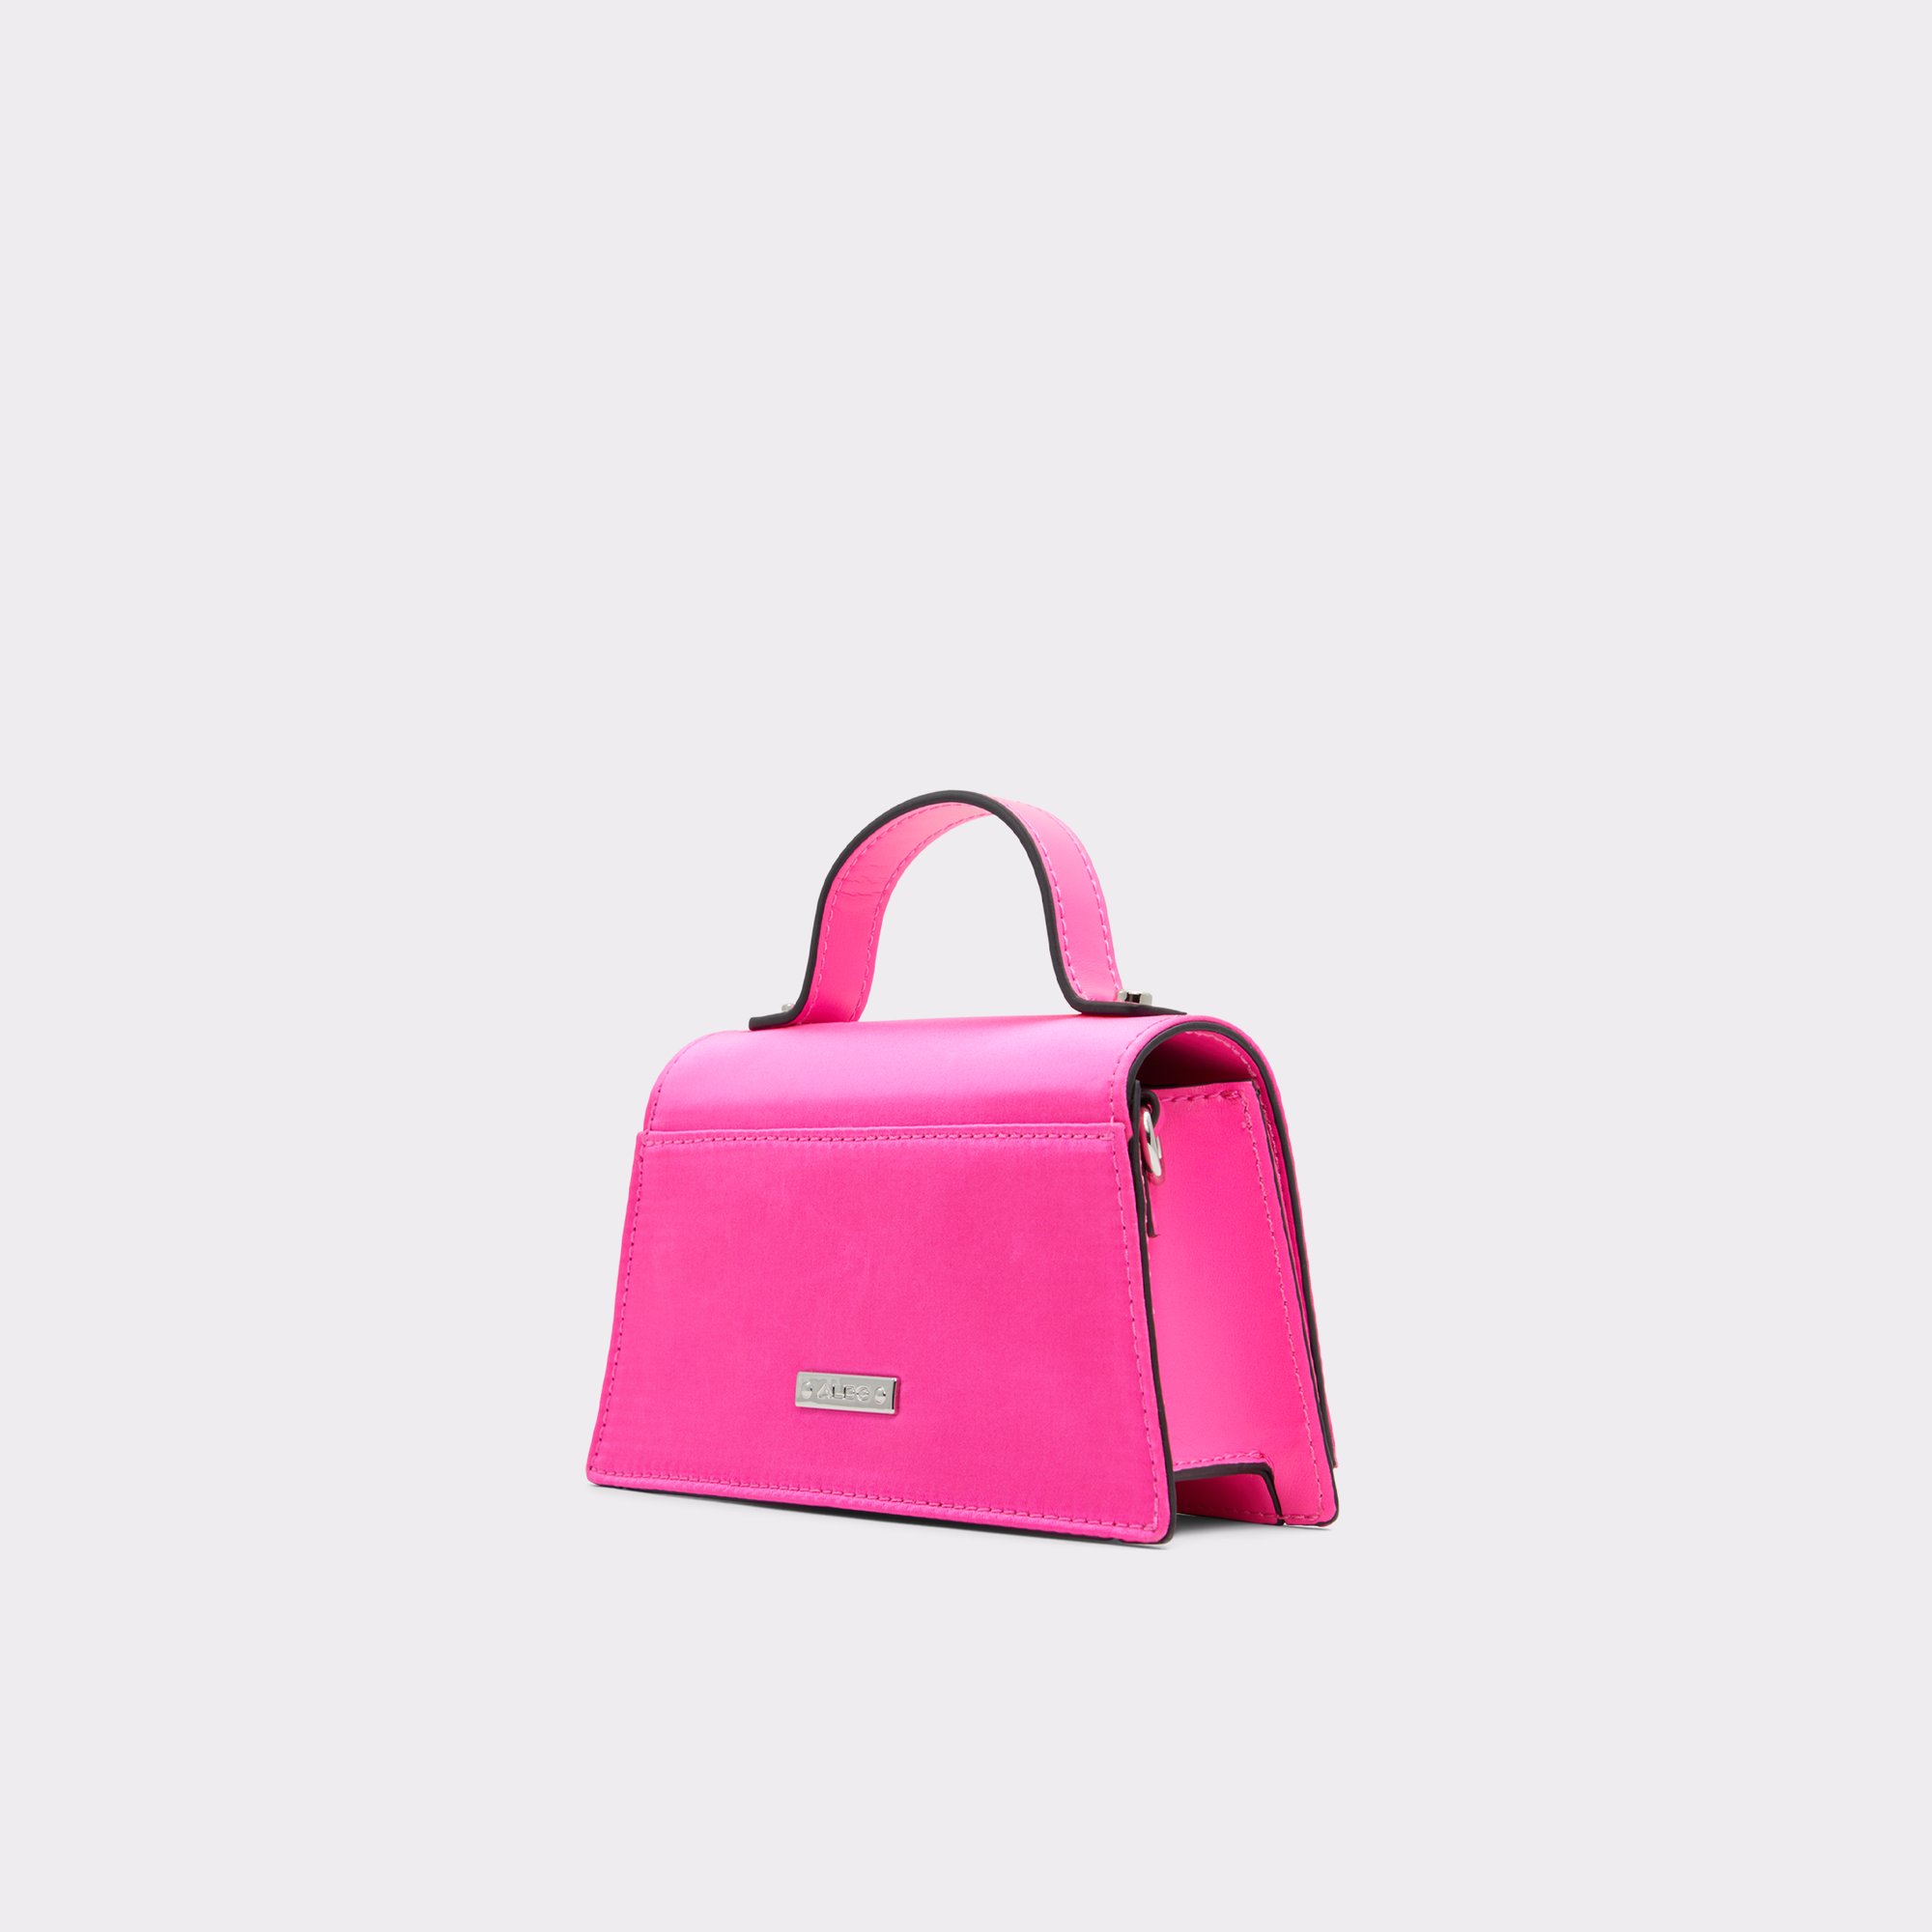 Pink Lace - New arrival ALDO MINI ALMA SLING BAG Very nice